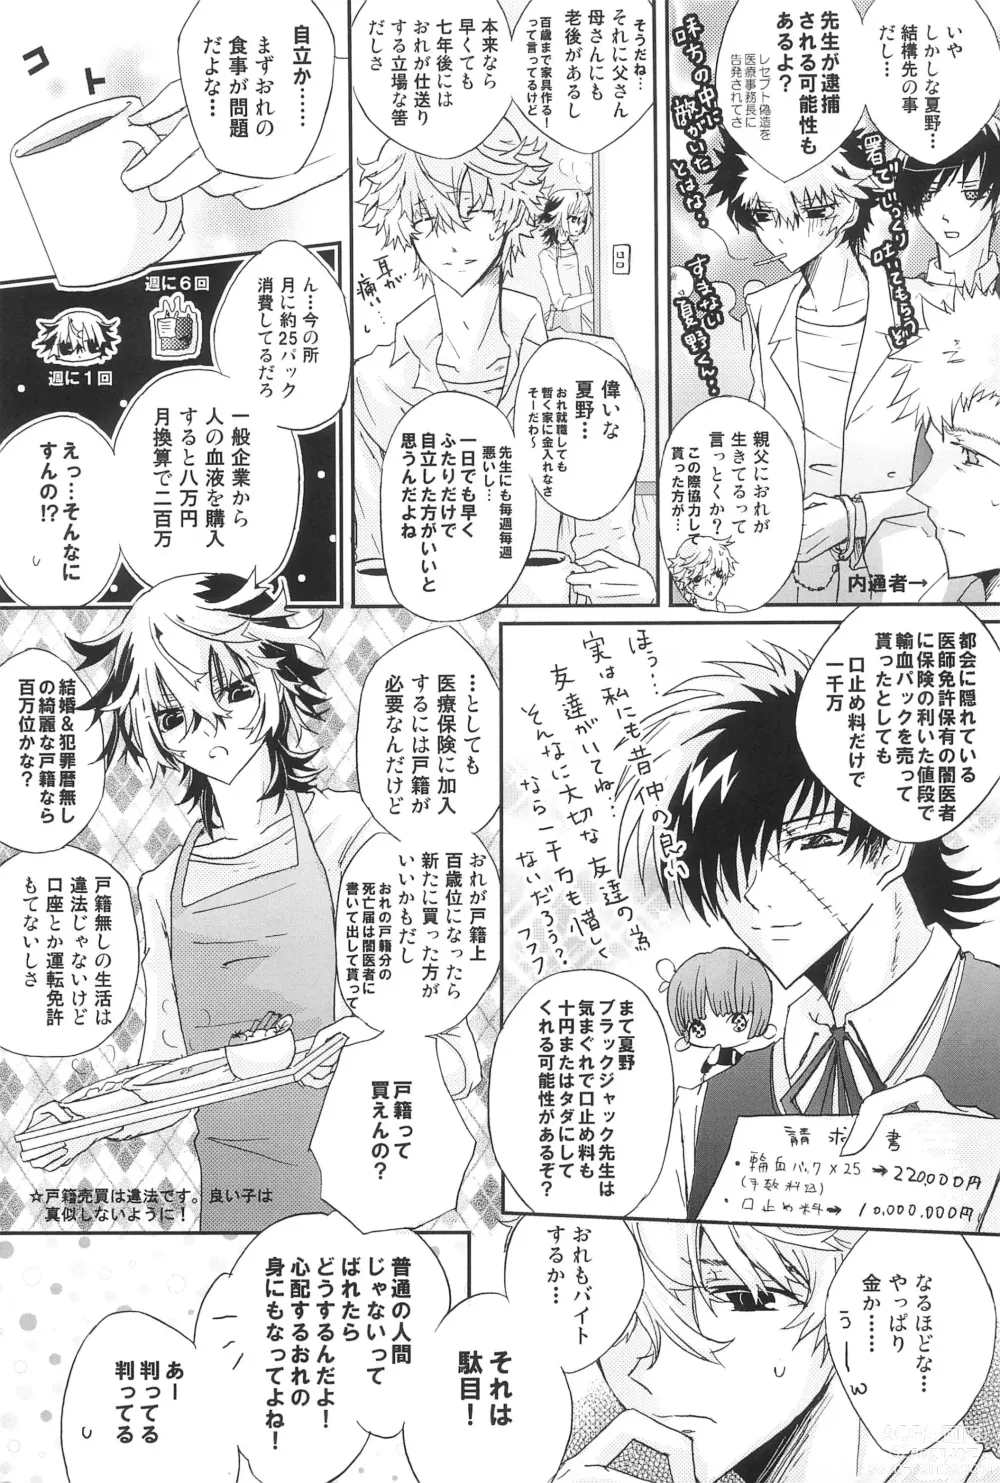 Page 7 of doujinshi Shiki-hon 18